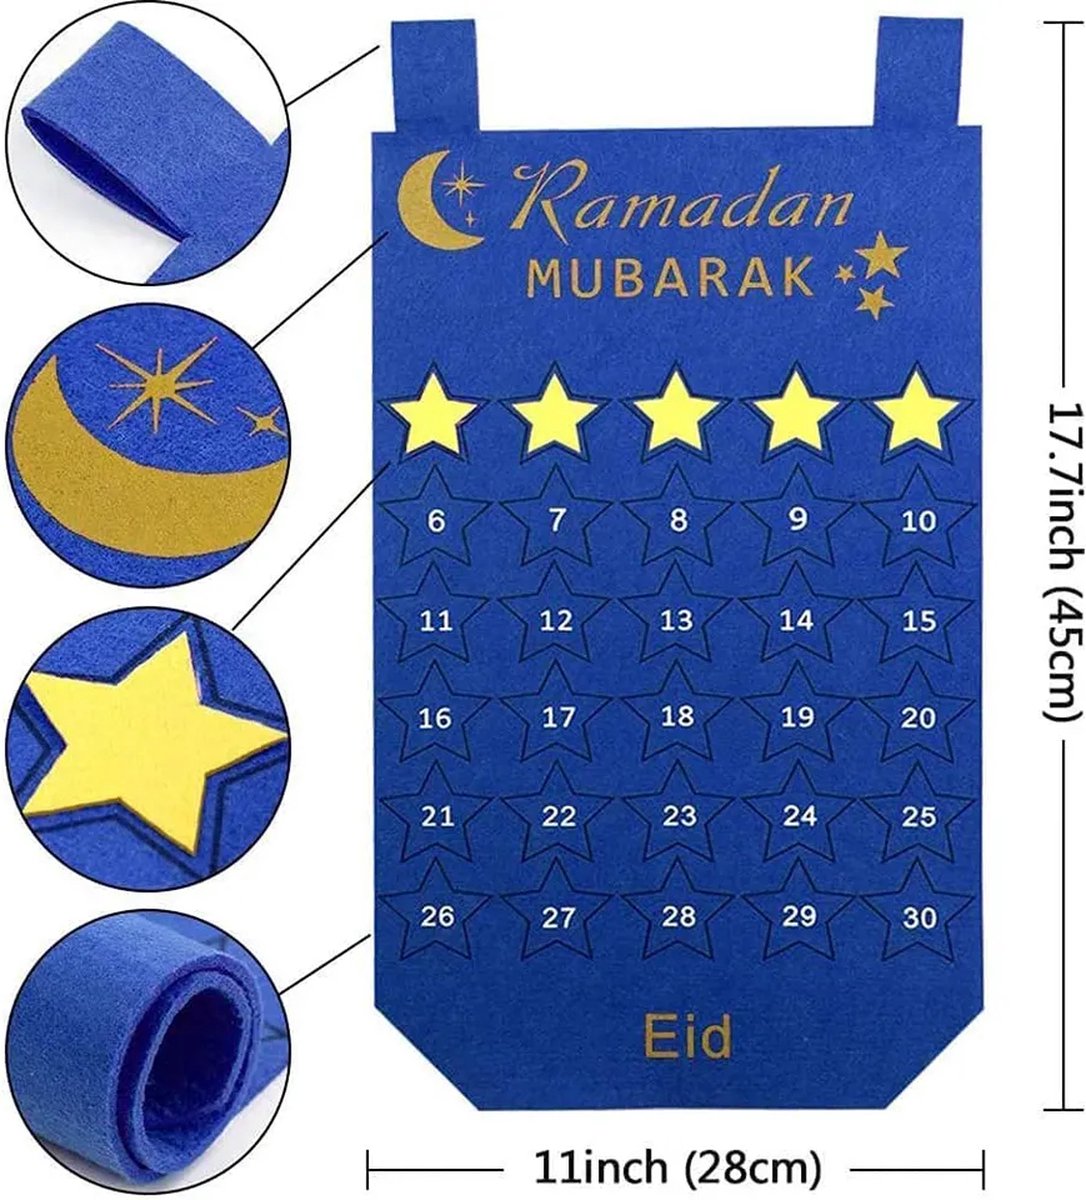 Calendrier Ramadan compte à rebours - Aid Mubarak en feutre - 30